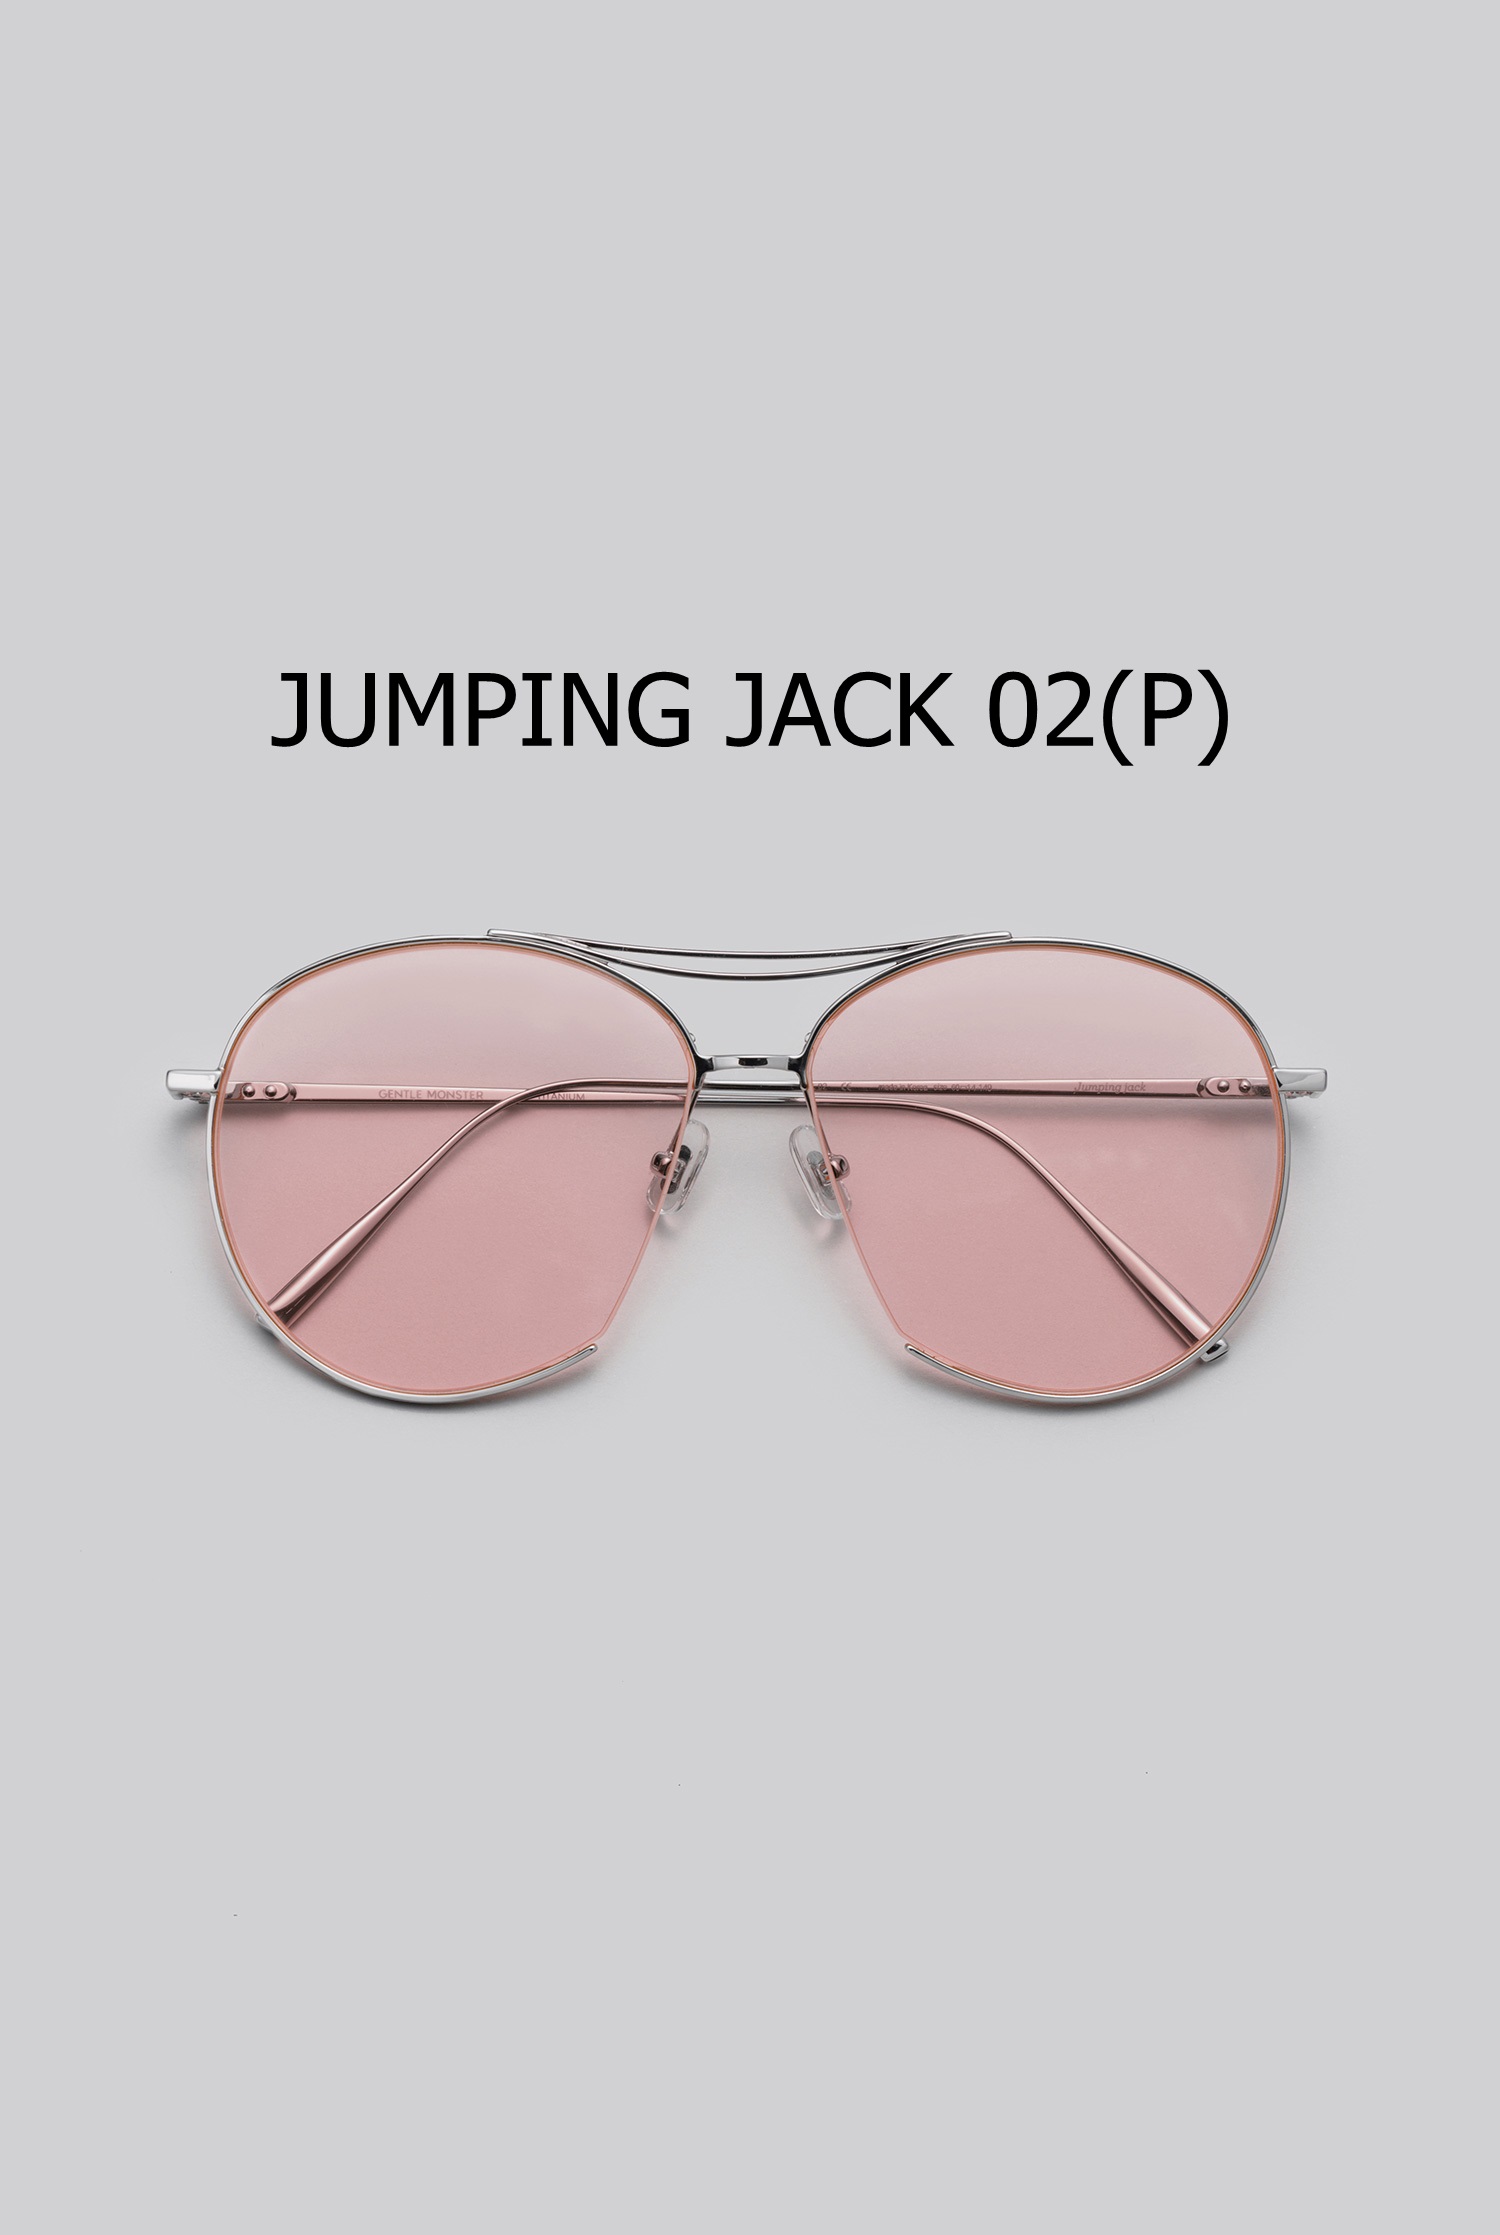 JUMPING JACK 02(P)